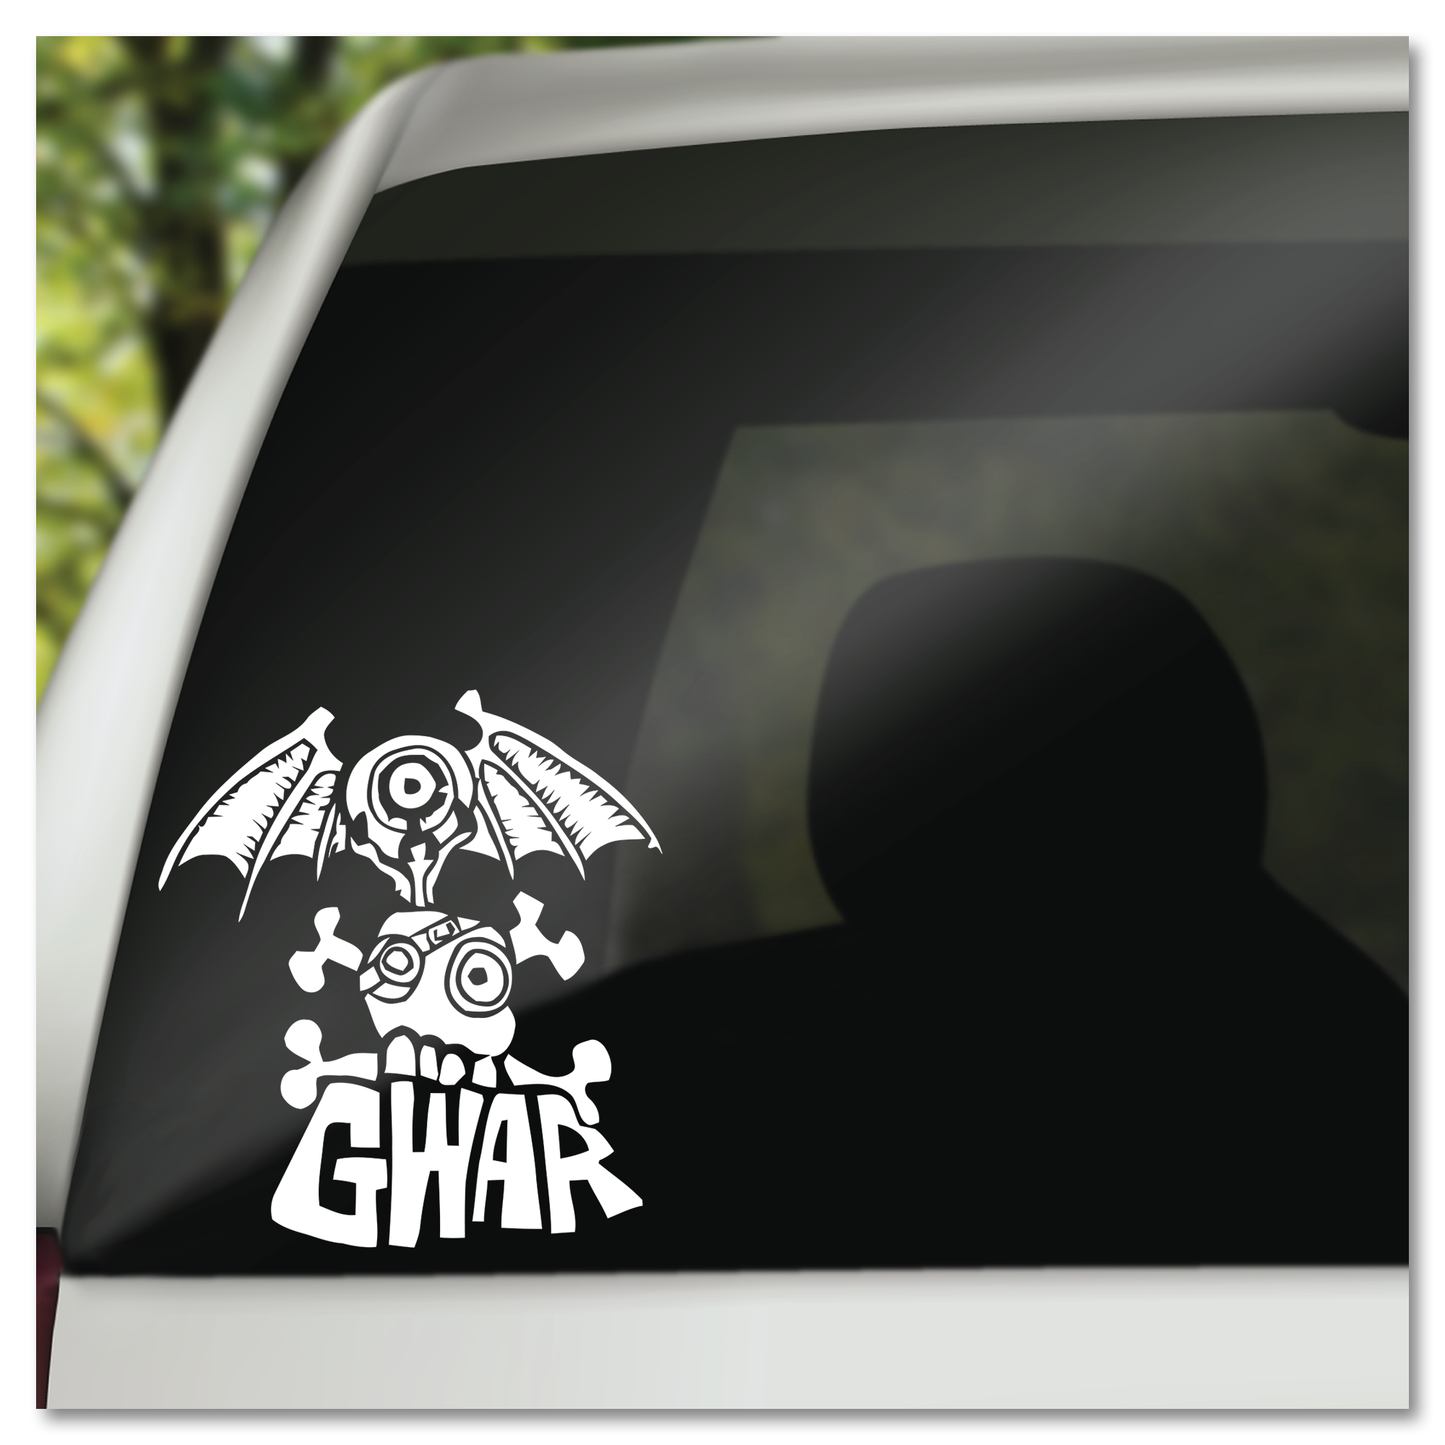 GWAR Vinyl Decal Sticker